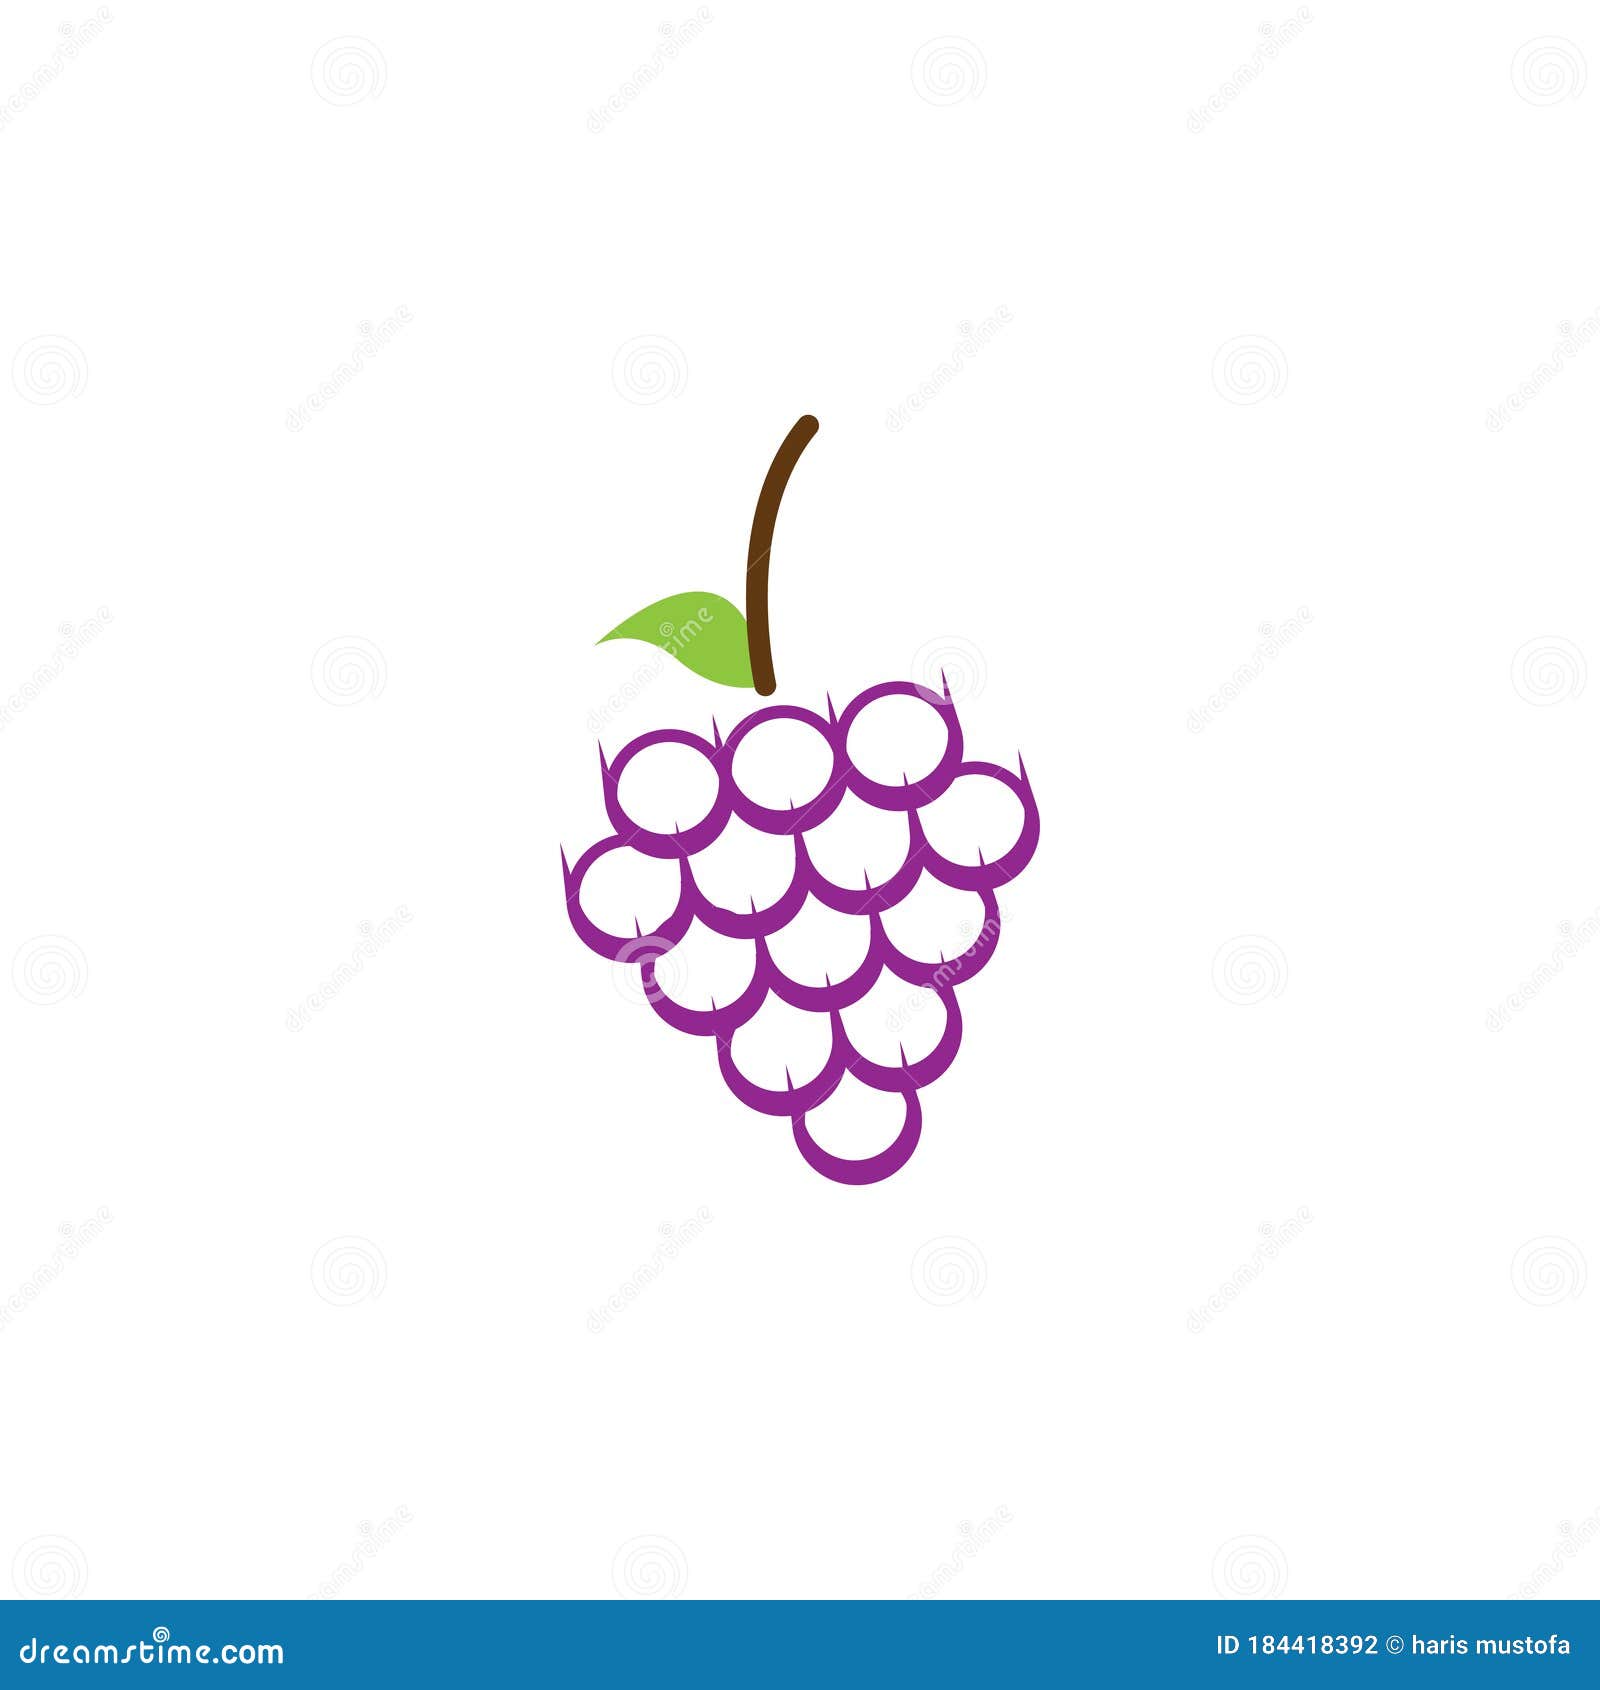 grapes graphic design